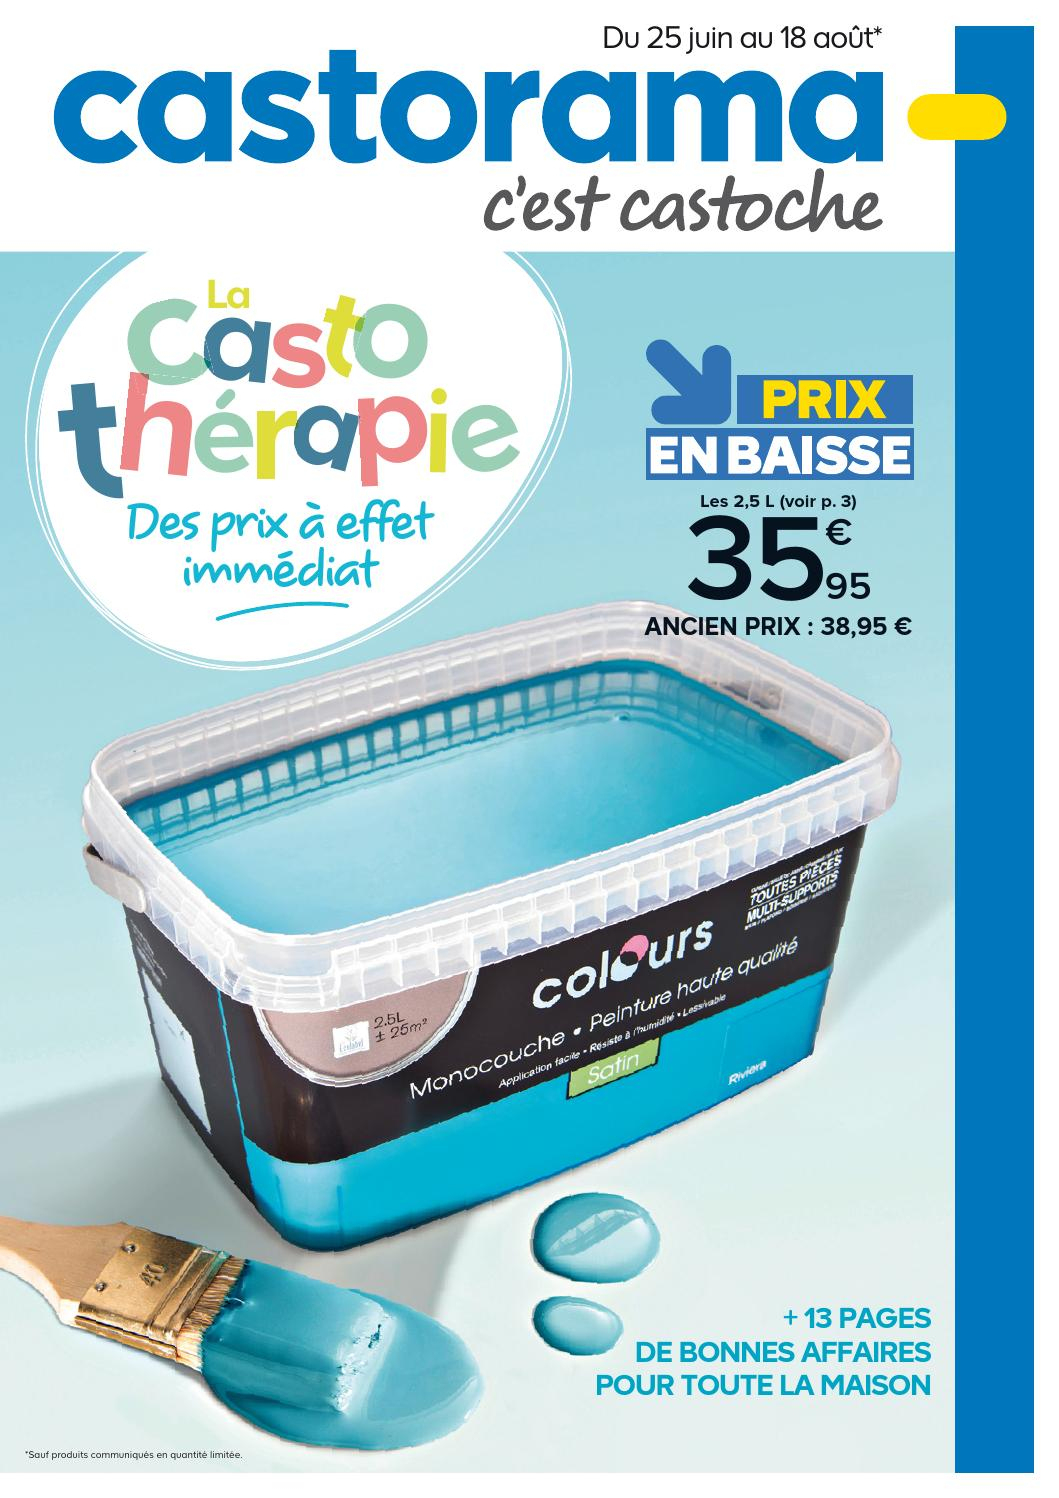 Castorama Catalogue 25Juin 18Aout2014 By Promocatalogues ... concernant Produit Piscine Castorama